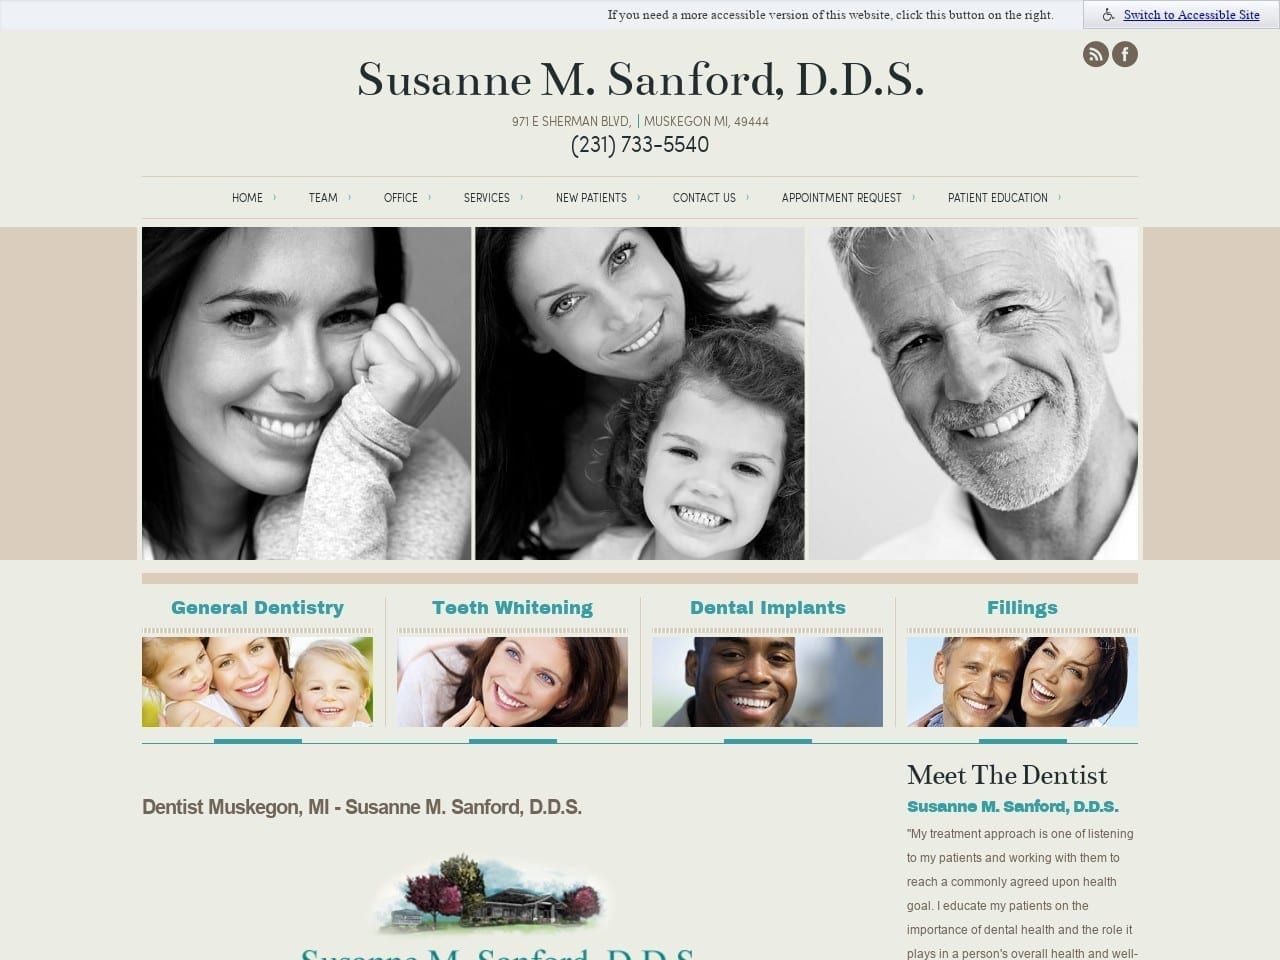 Susanne M. Sanford D.D.S. Website Screenshot from ssanforddds.com